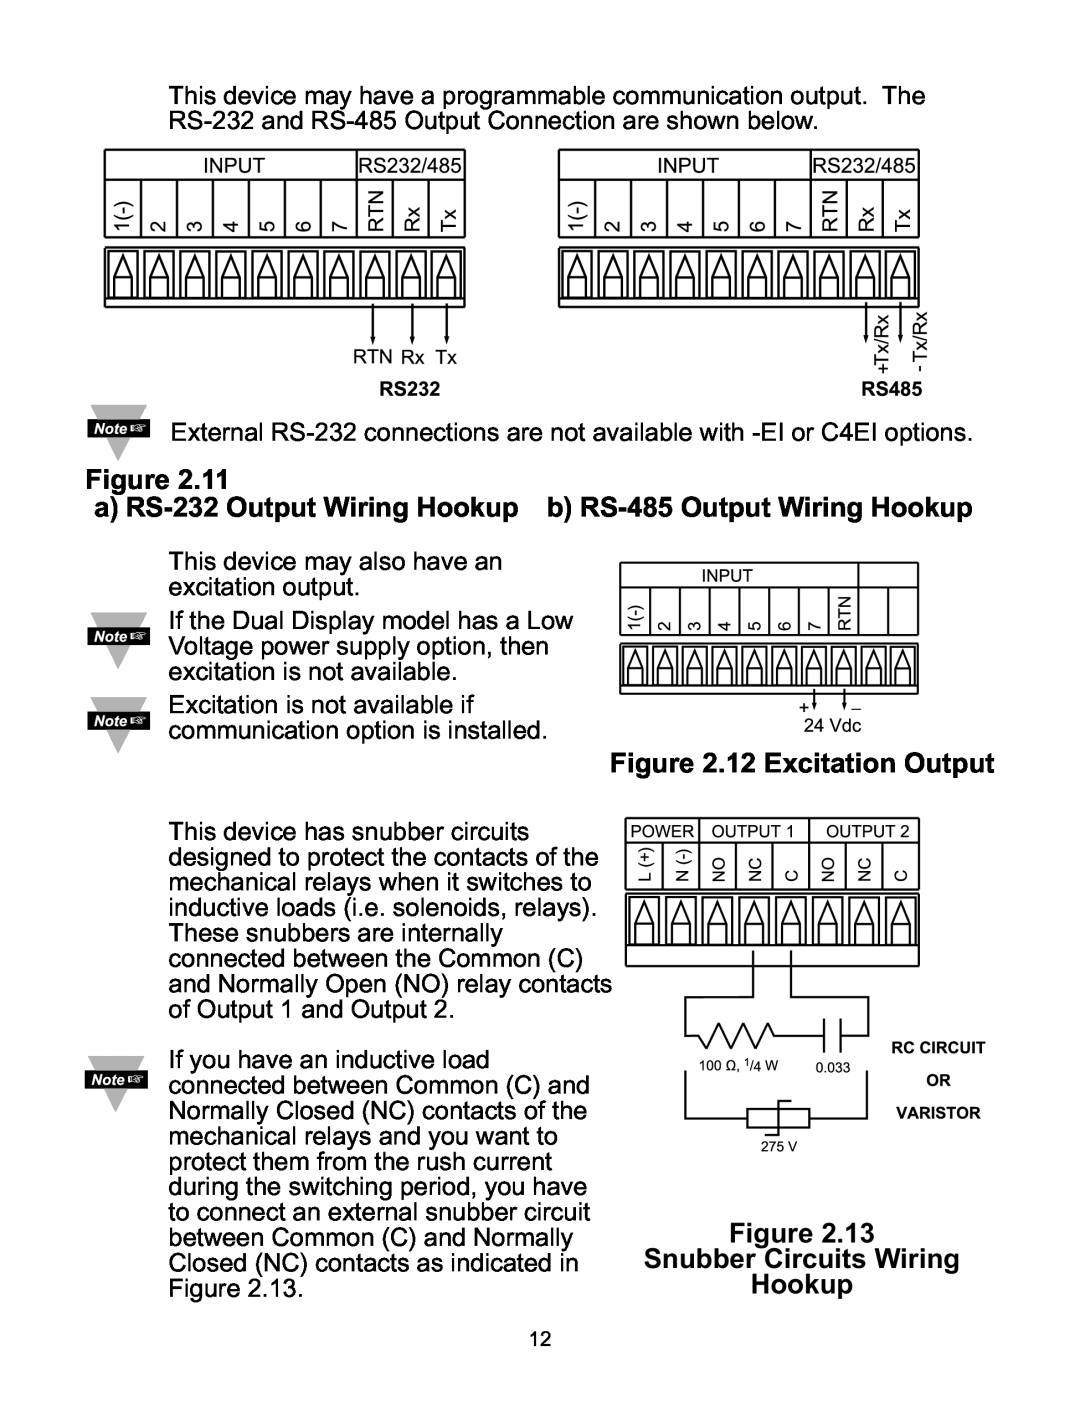 Omega CNI16D, CNI8DV, CNI8C, CNI8DH, CNI32 a RS-232 Output Wiring Hookup b RS-485 Output Wiring Hookup, 12 Excitation Output 